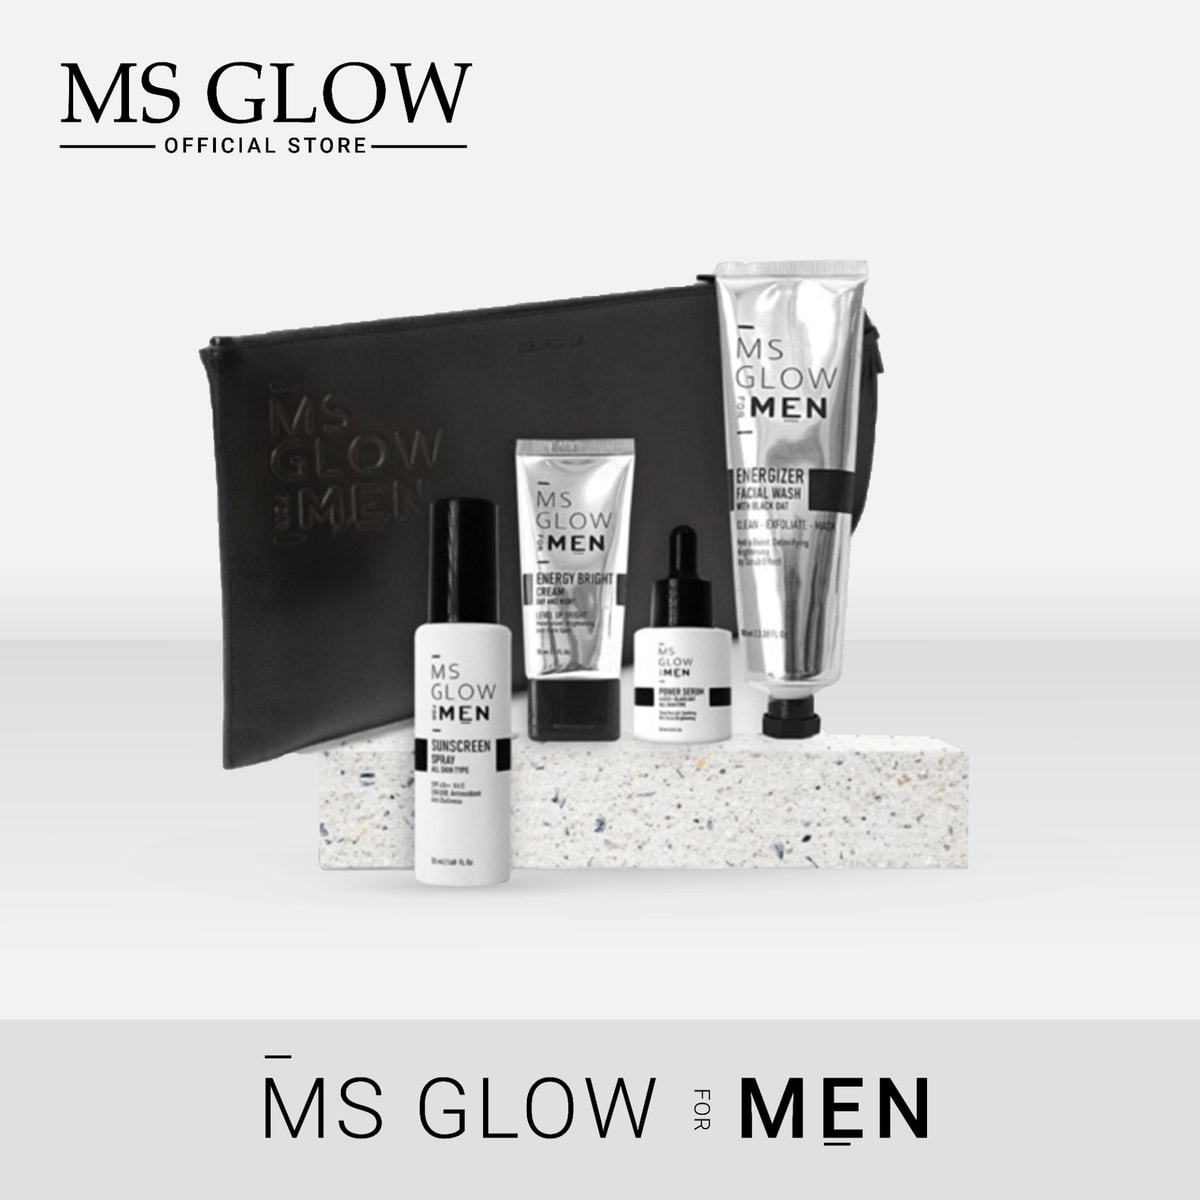 ms glow store